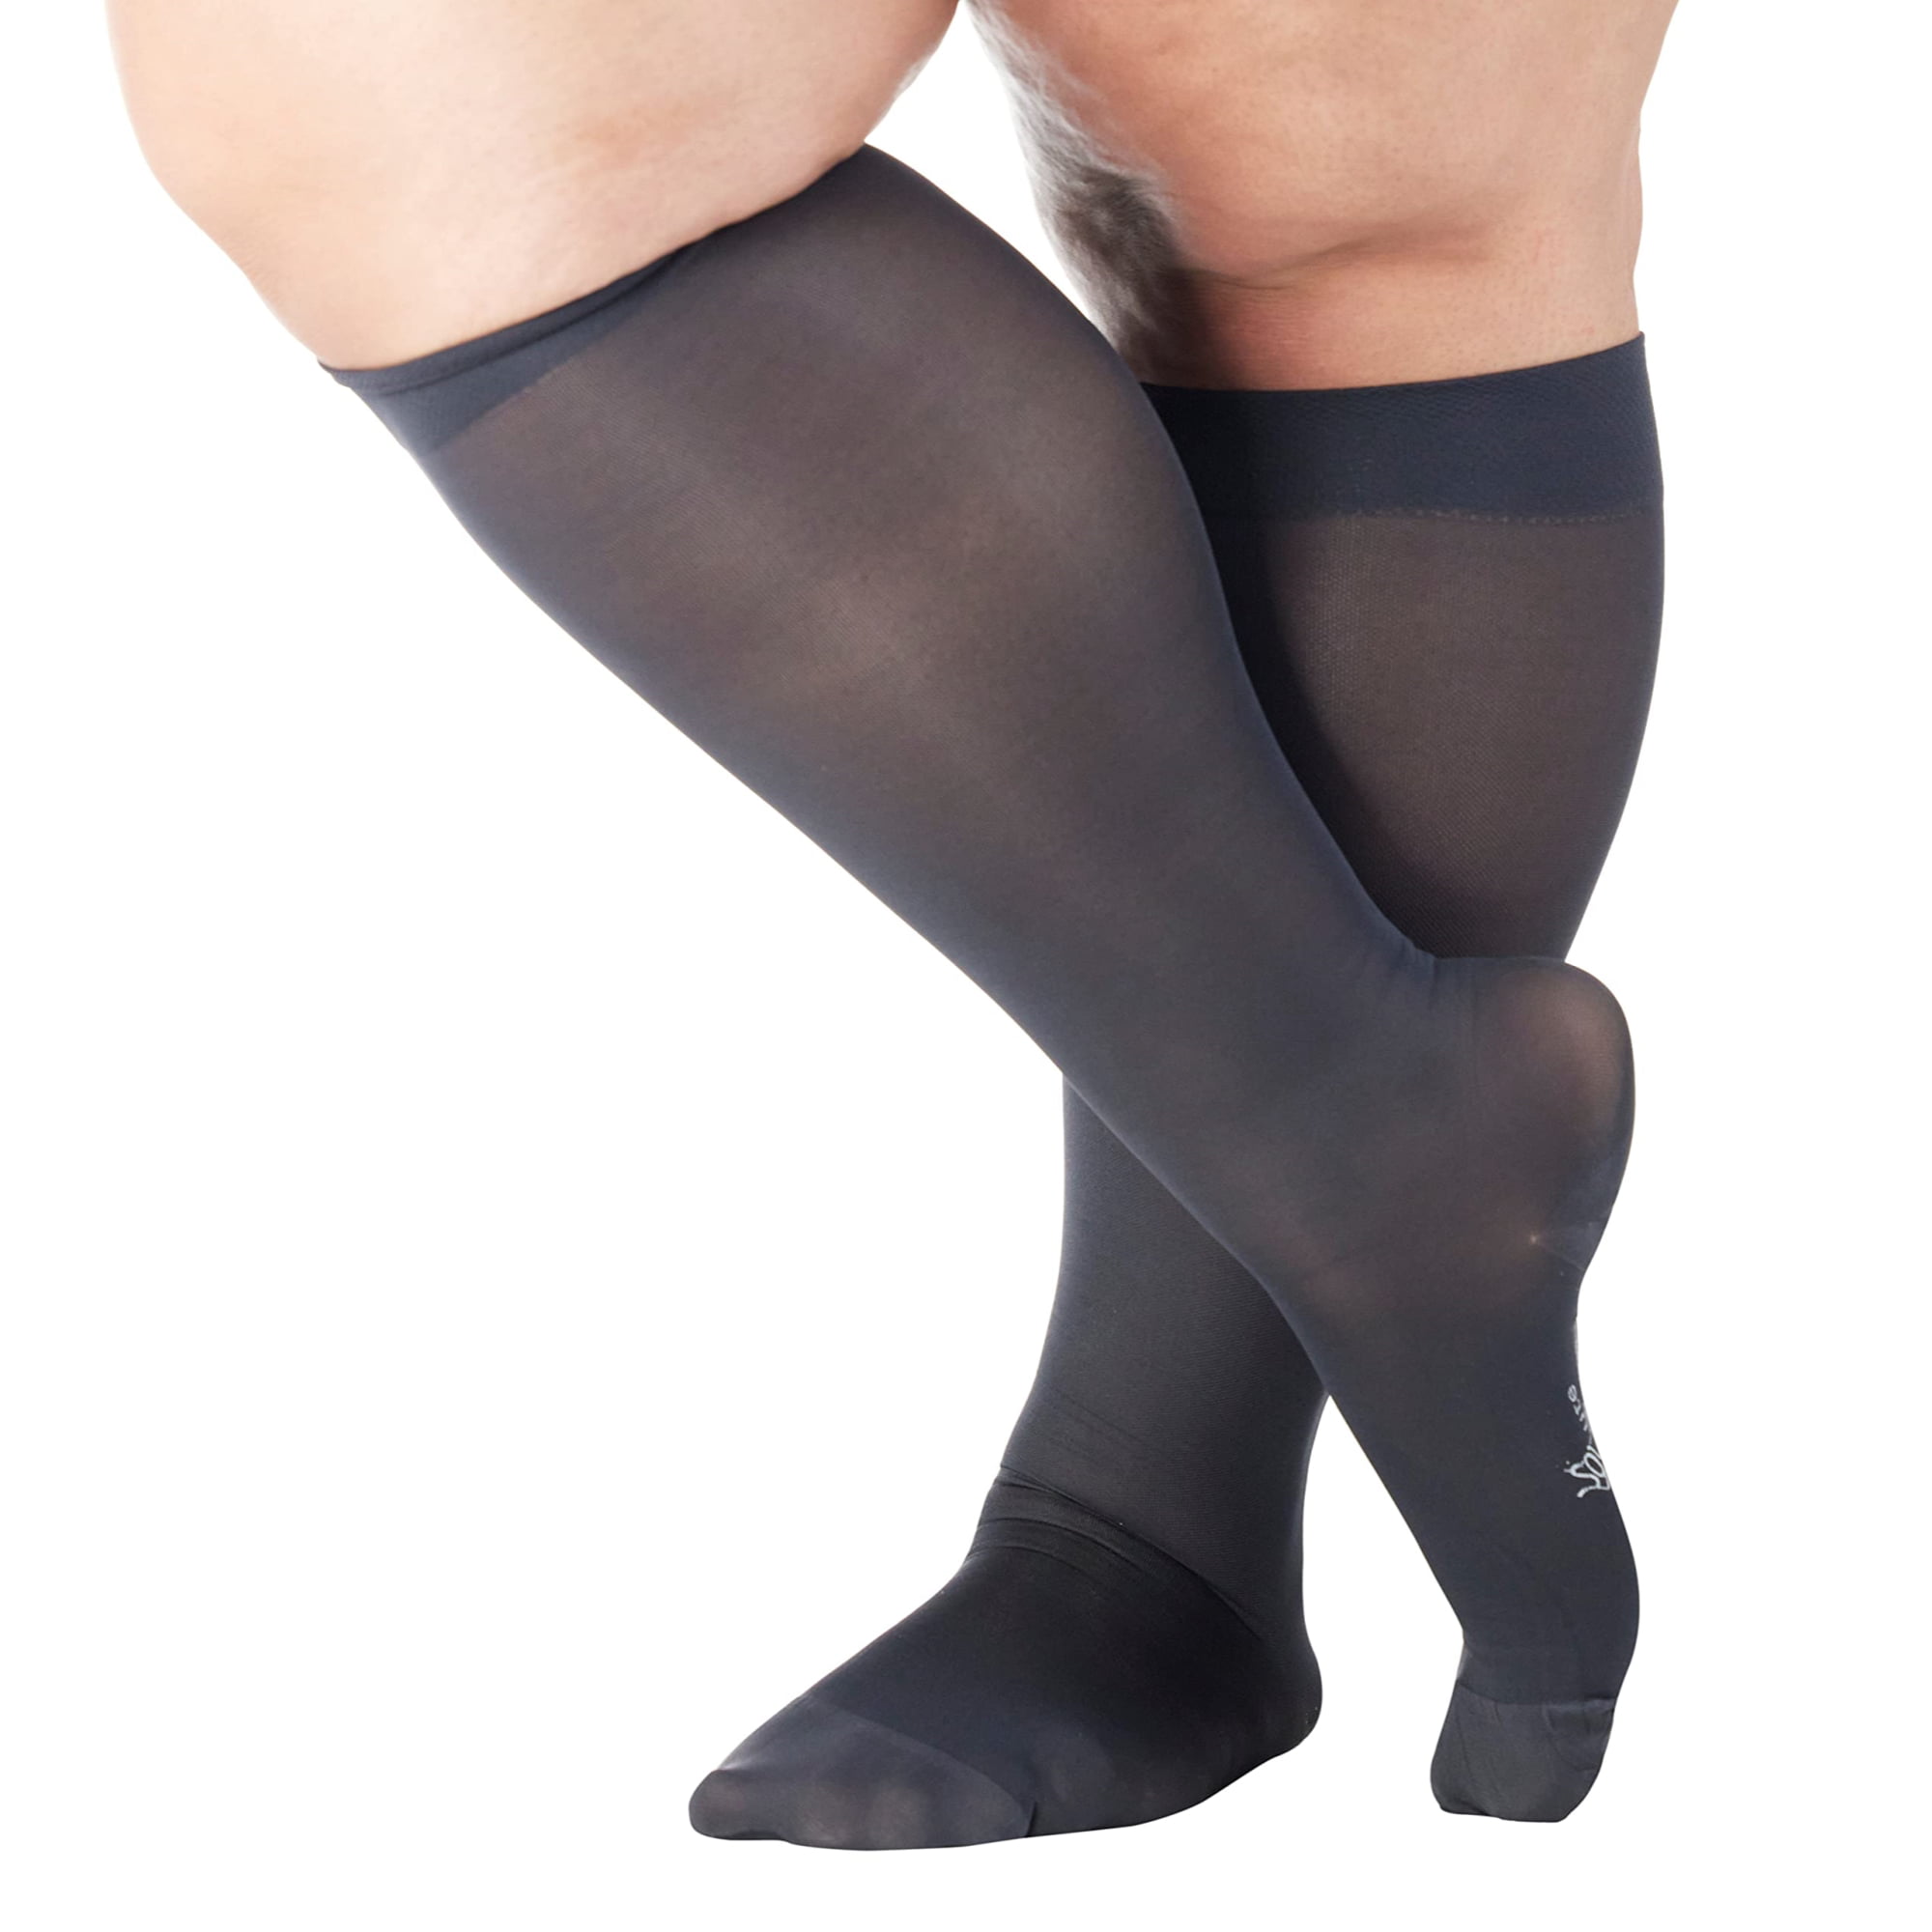 Nylon Socks Stockings 20" L Various Design Stitched Black girls lg women sm New